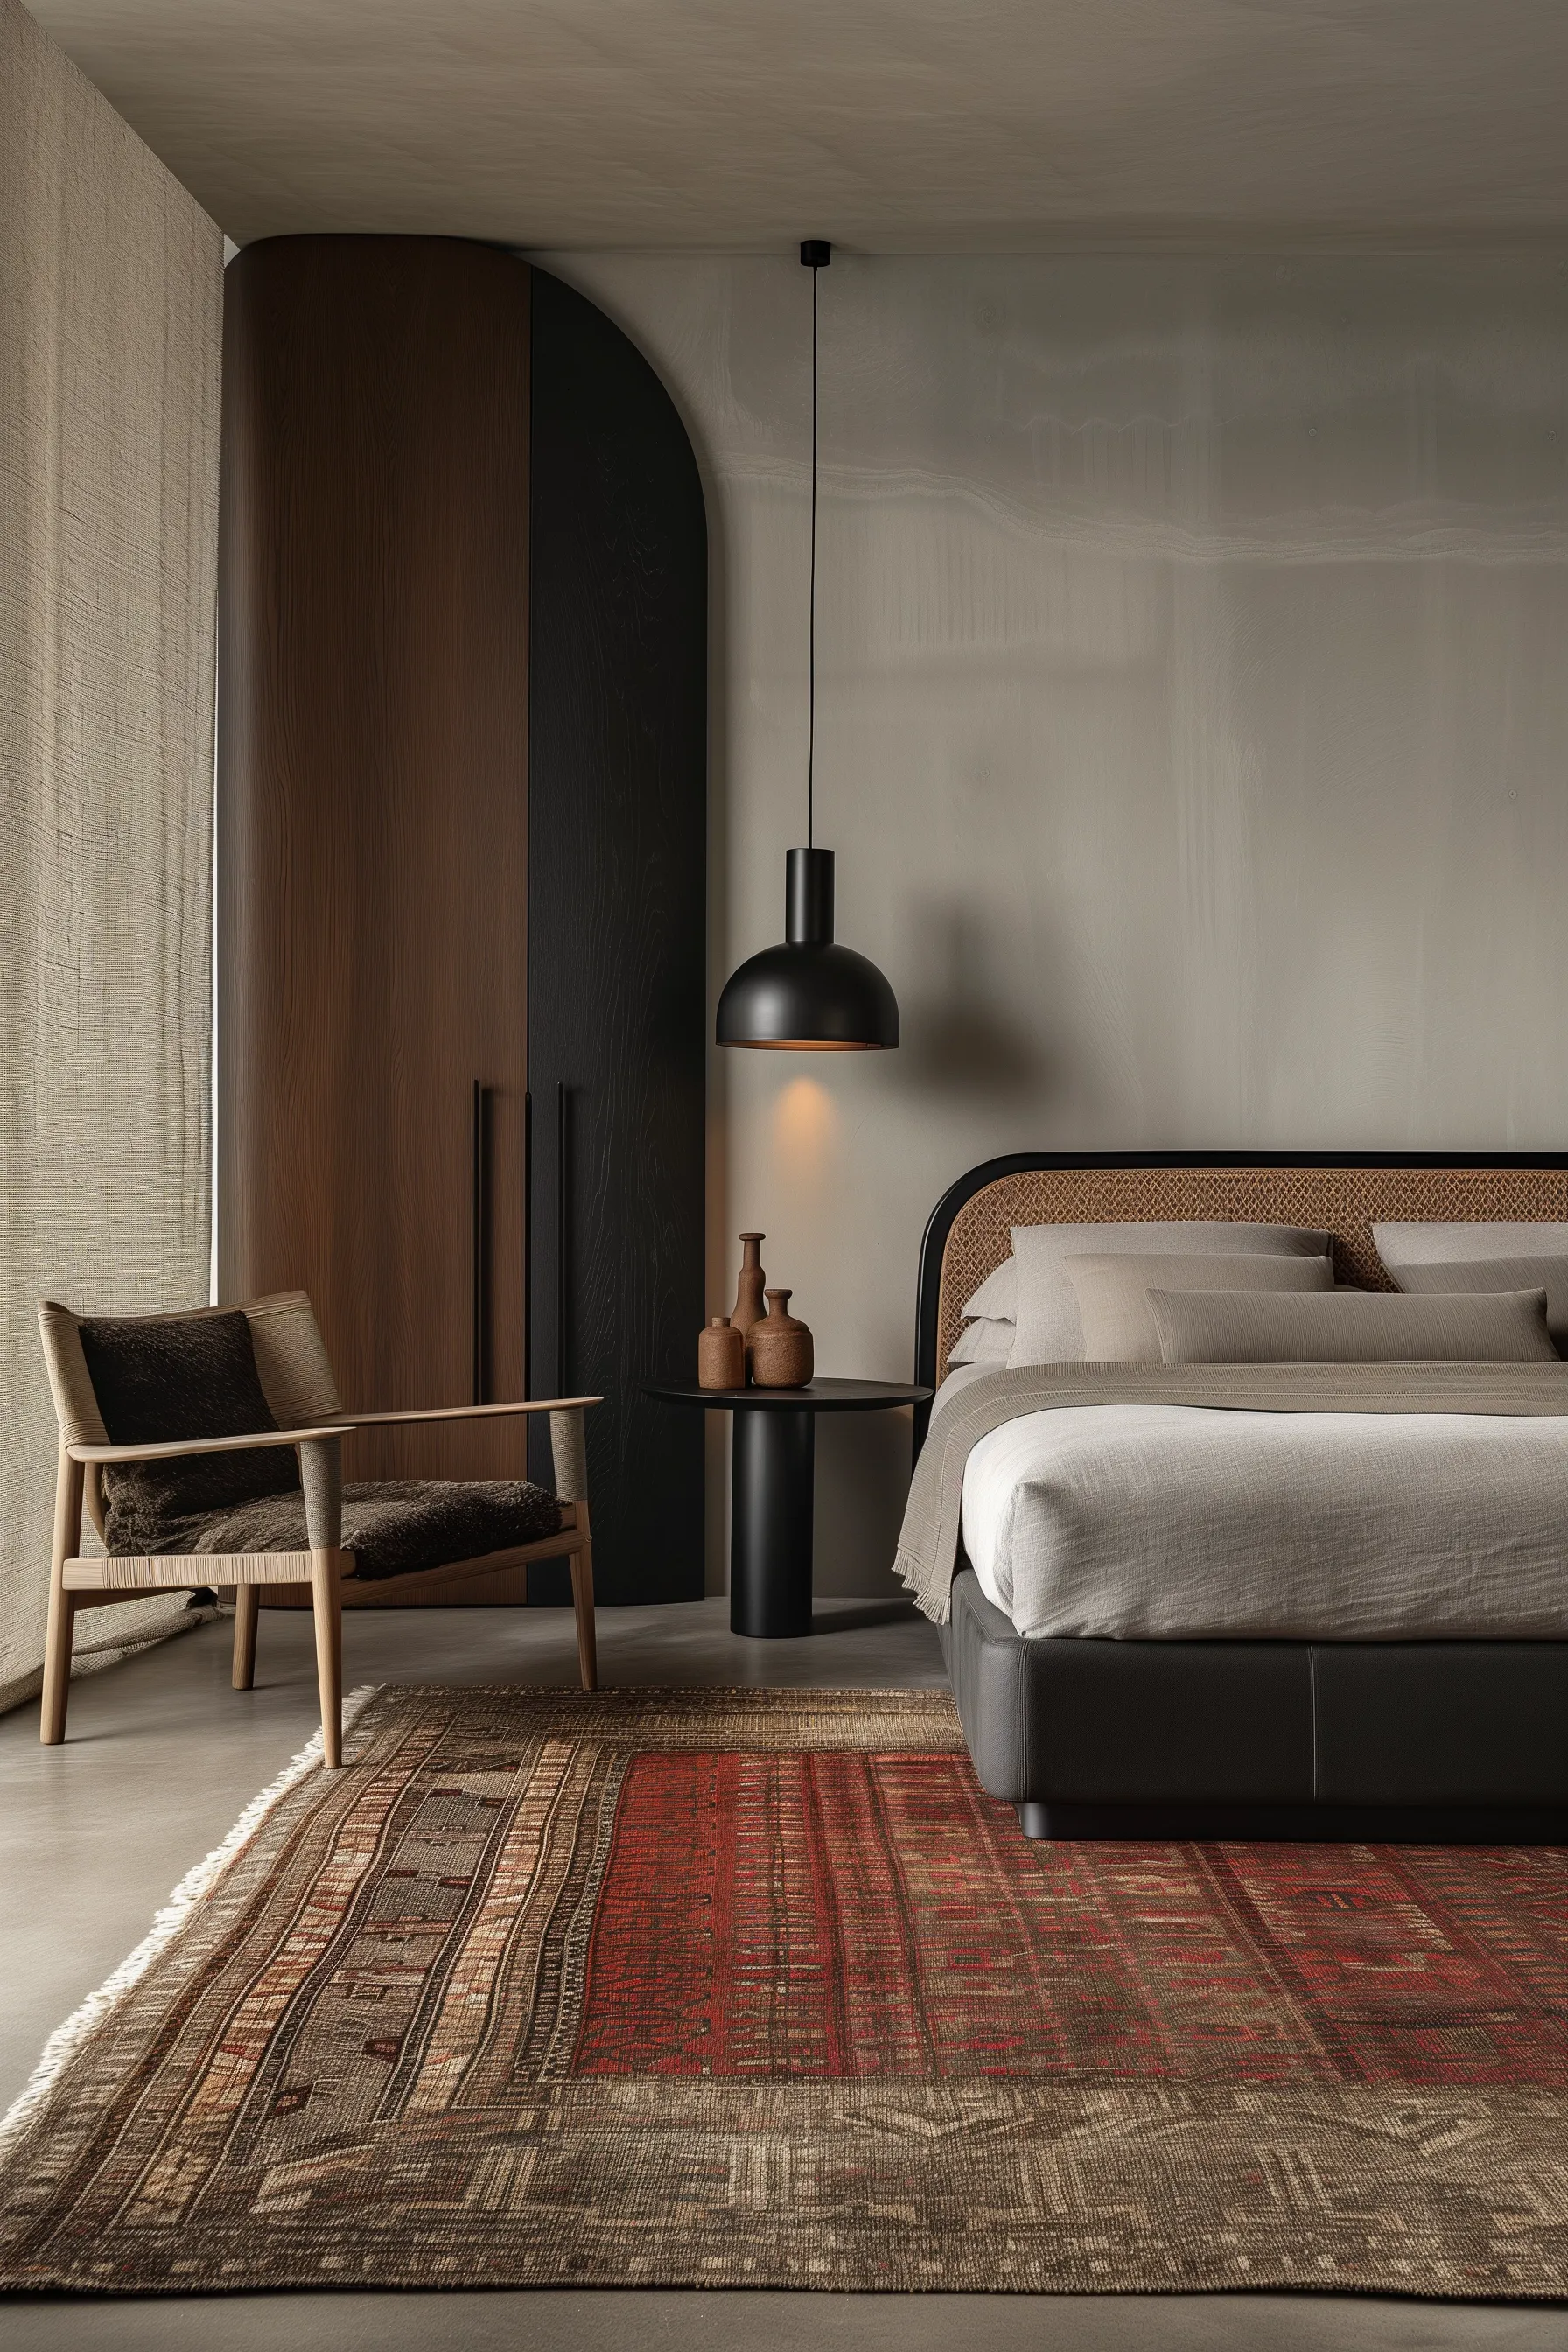 Modern italian bedroom with a woven headboard